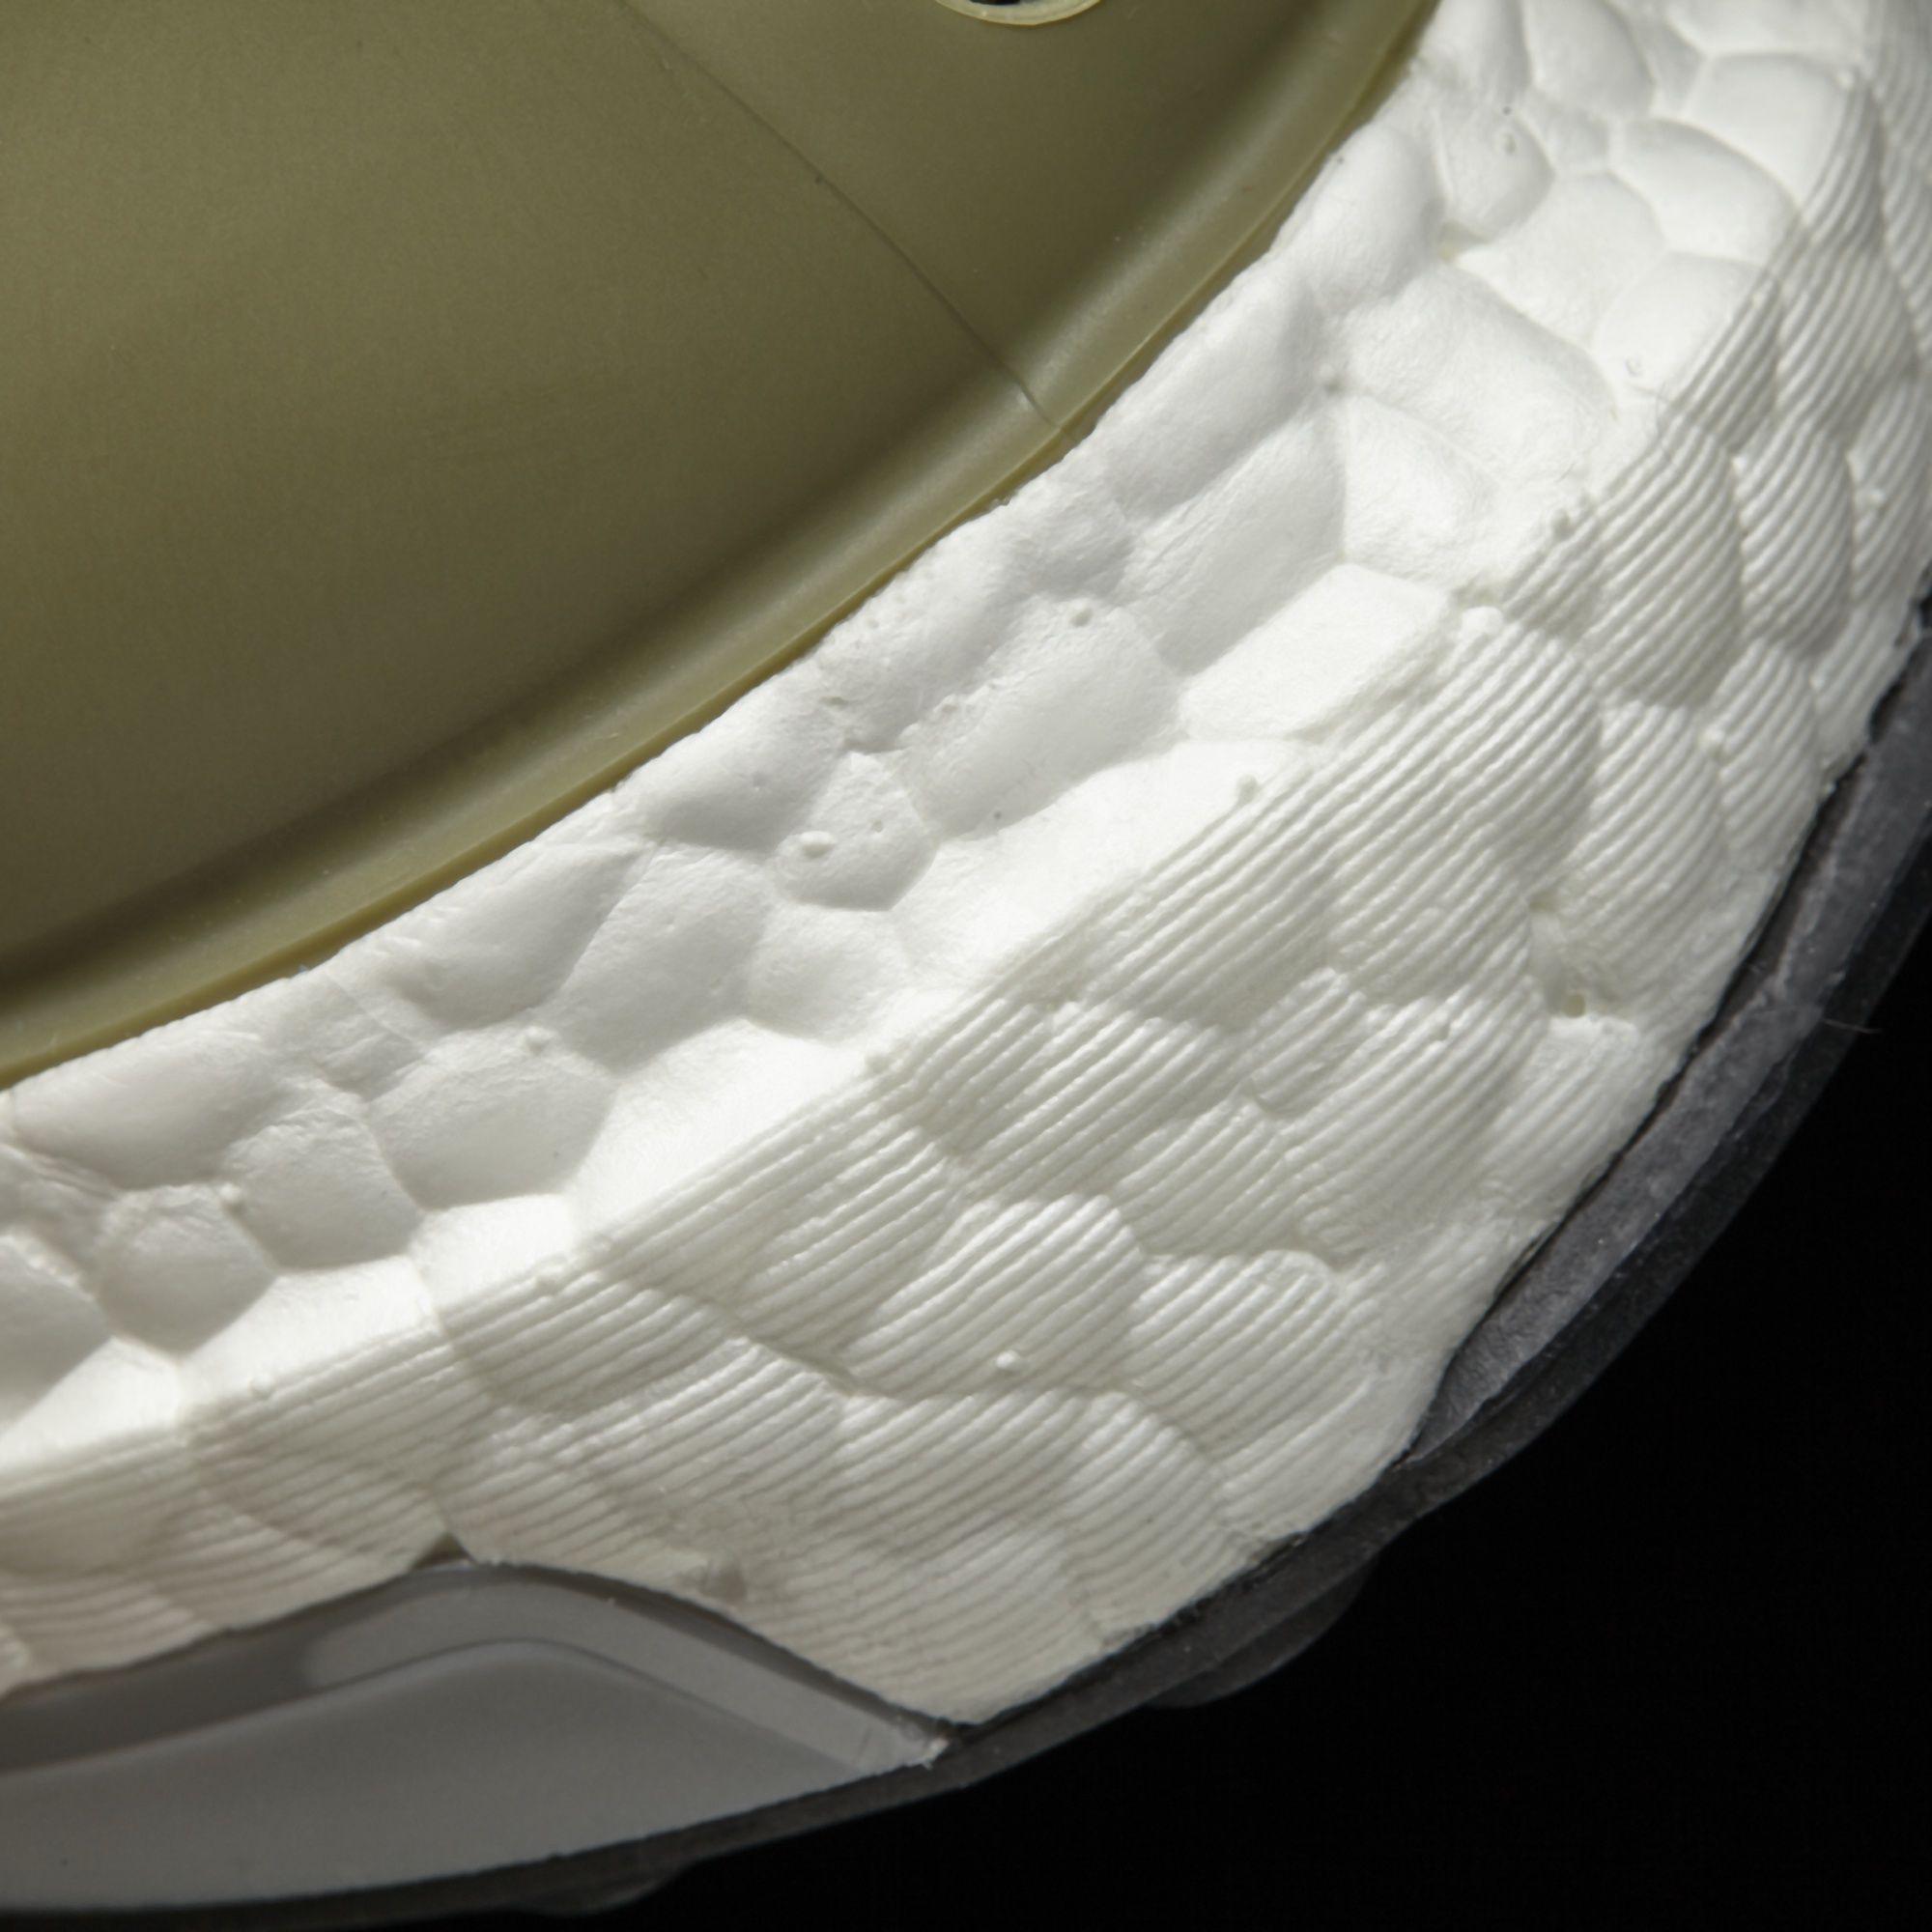 Adidas Ultra Boost
Pearl Grey / Trace Cargo